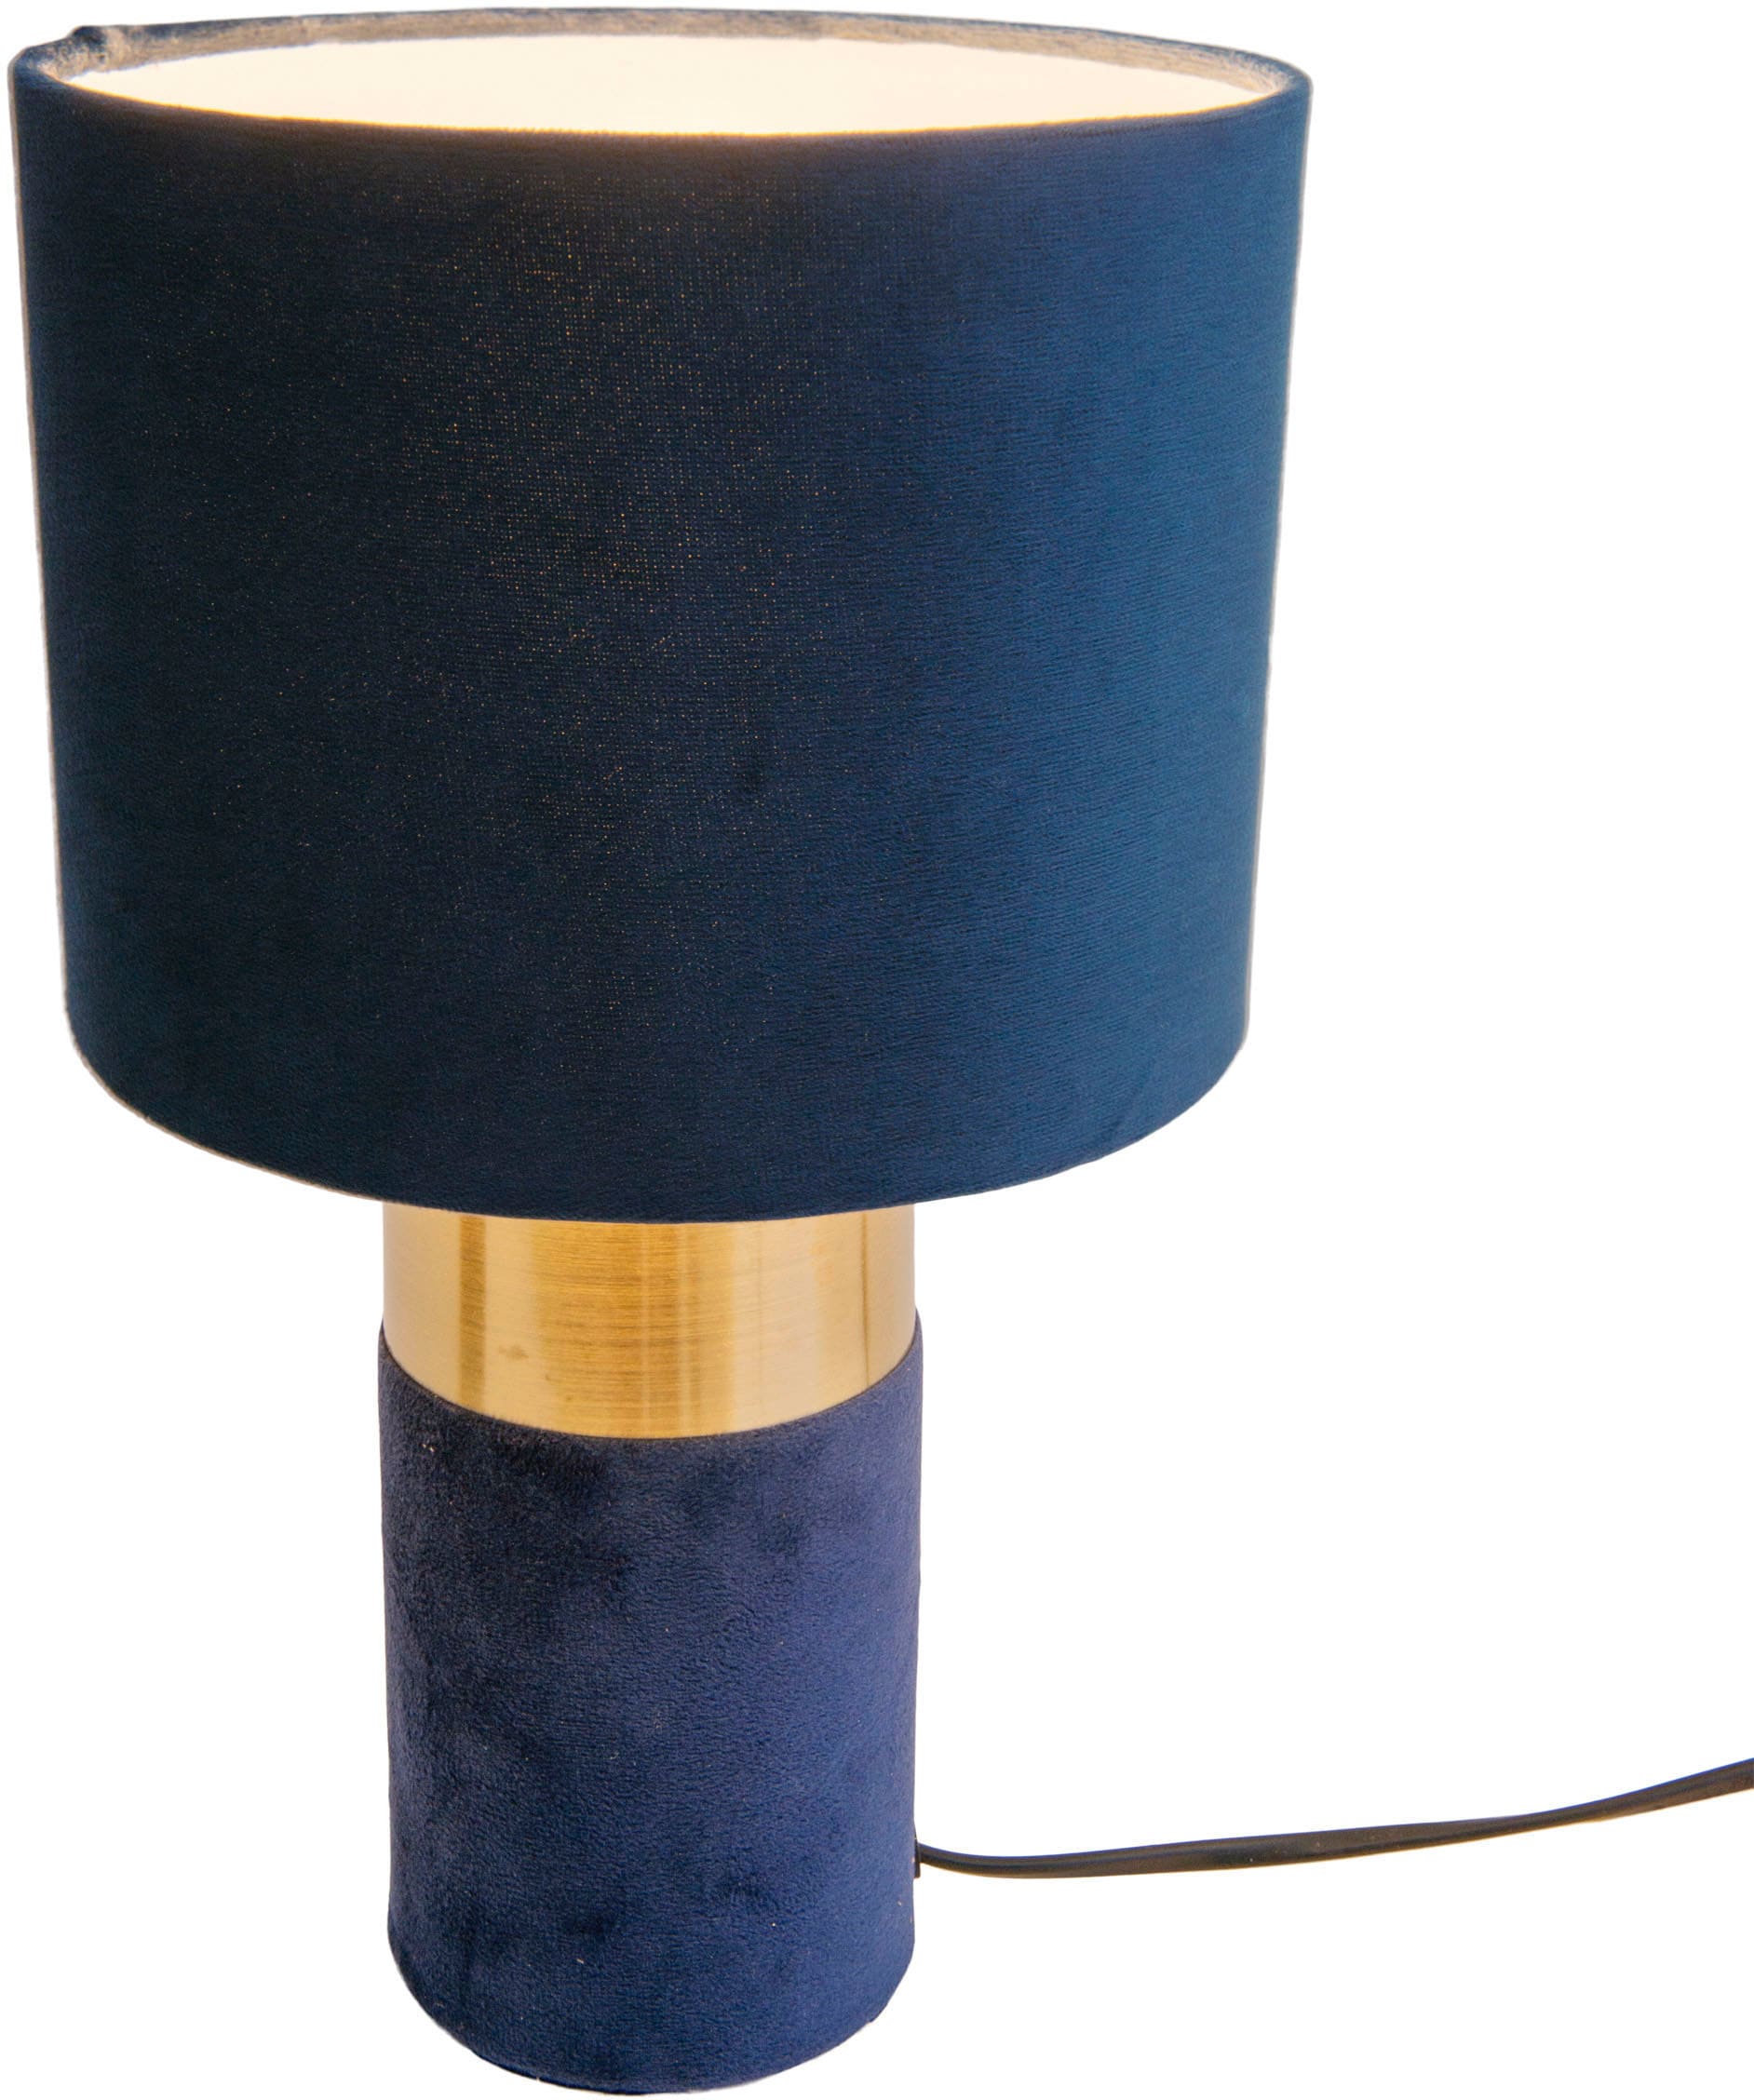 BAUR flammig-flammig, | 1 Tischleuchte Höhe 150cm Zuleitung »Bordo«, 1xE14, 32cm, näve blau, Fuß Textilschirm blau gold,